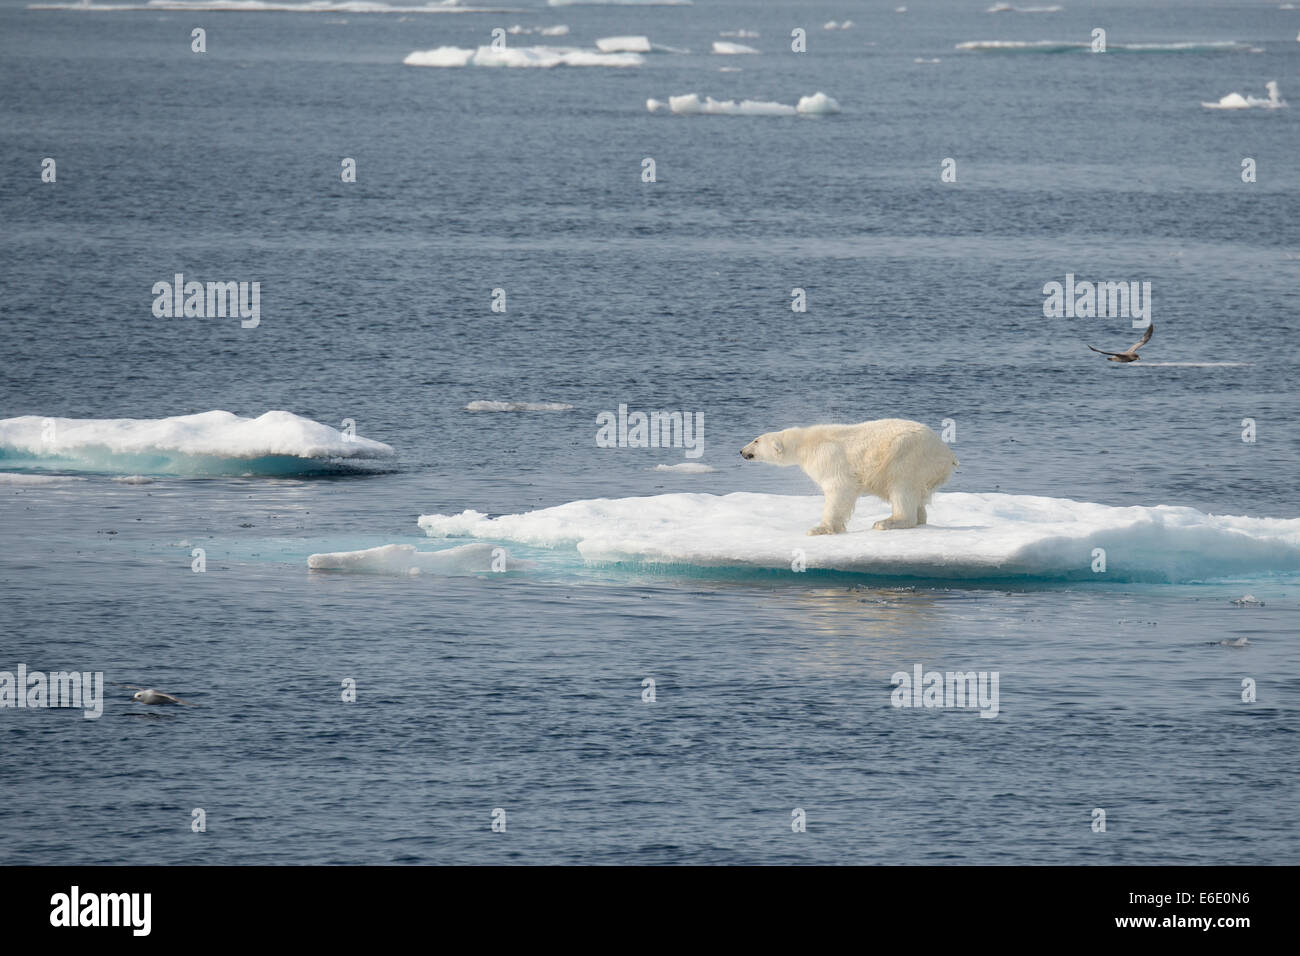 Male Polar Bear, Ursus maritimus, shaking on an iceberg to dry its fur, Baffin Island, Canadian Arctic. Stock Photo